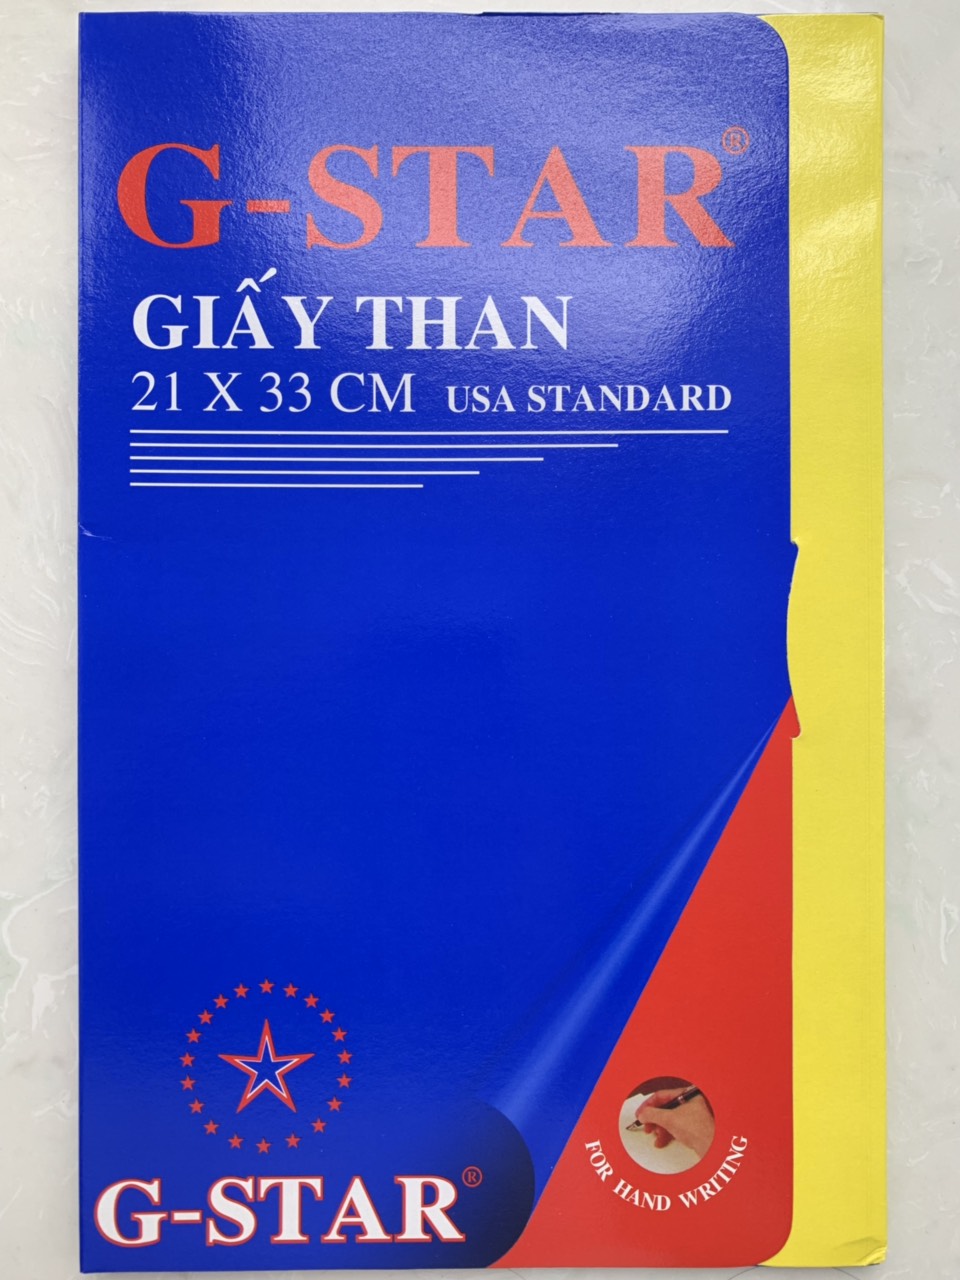 Giấy than G-STAR